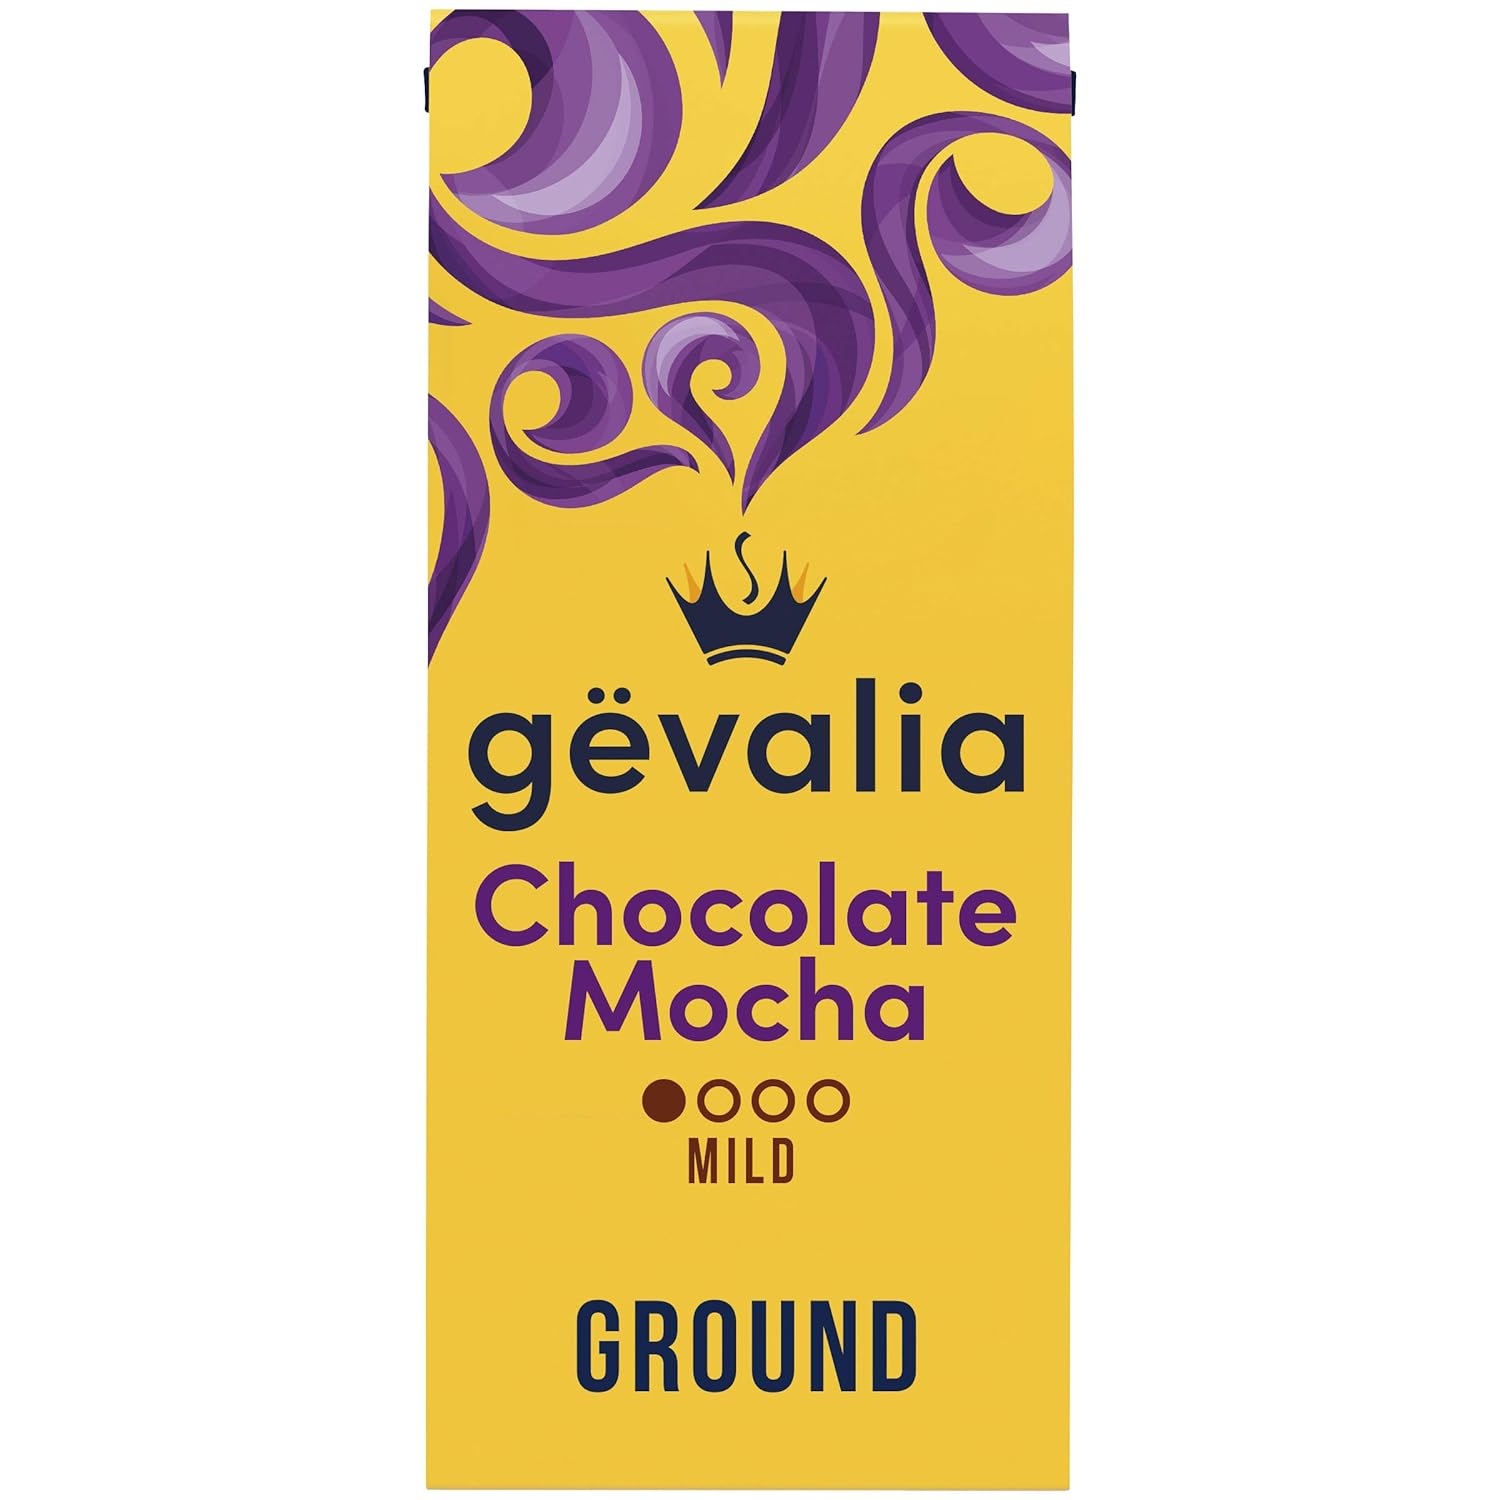 Gevalia Chocolate Mocha Mild Roast Ground Coffee (12 oz Bag)